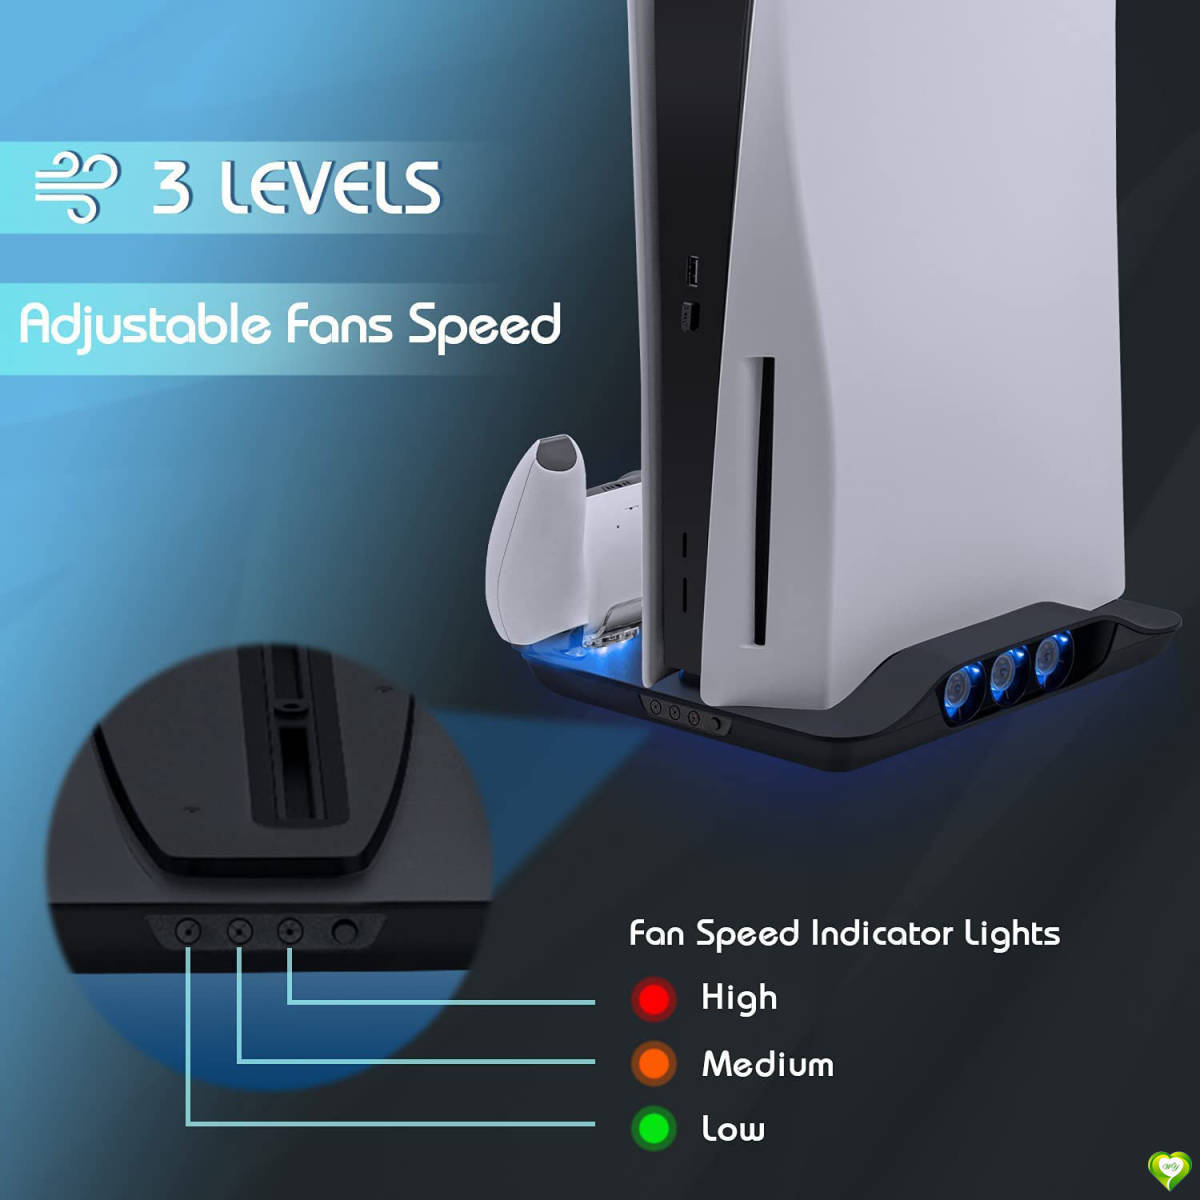 PS5 縦置きスタンド 冷却ファン＆コントローラー2台同時充電可能 多機能USB付き PS5通常版（UHD）とデジタル版適用 ブラック 黒